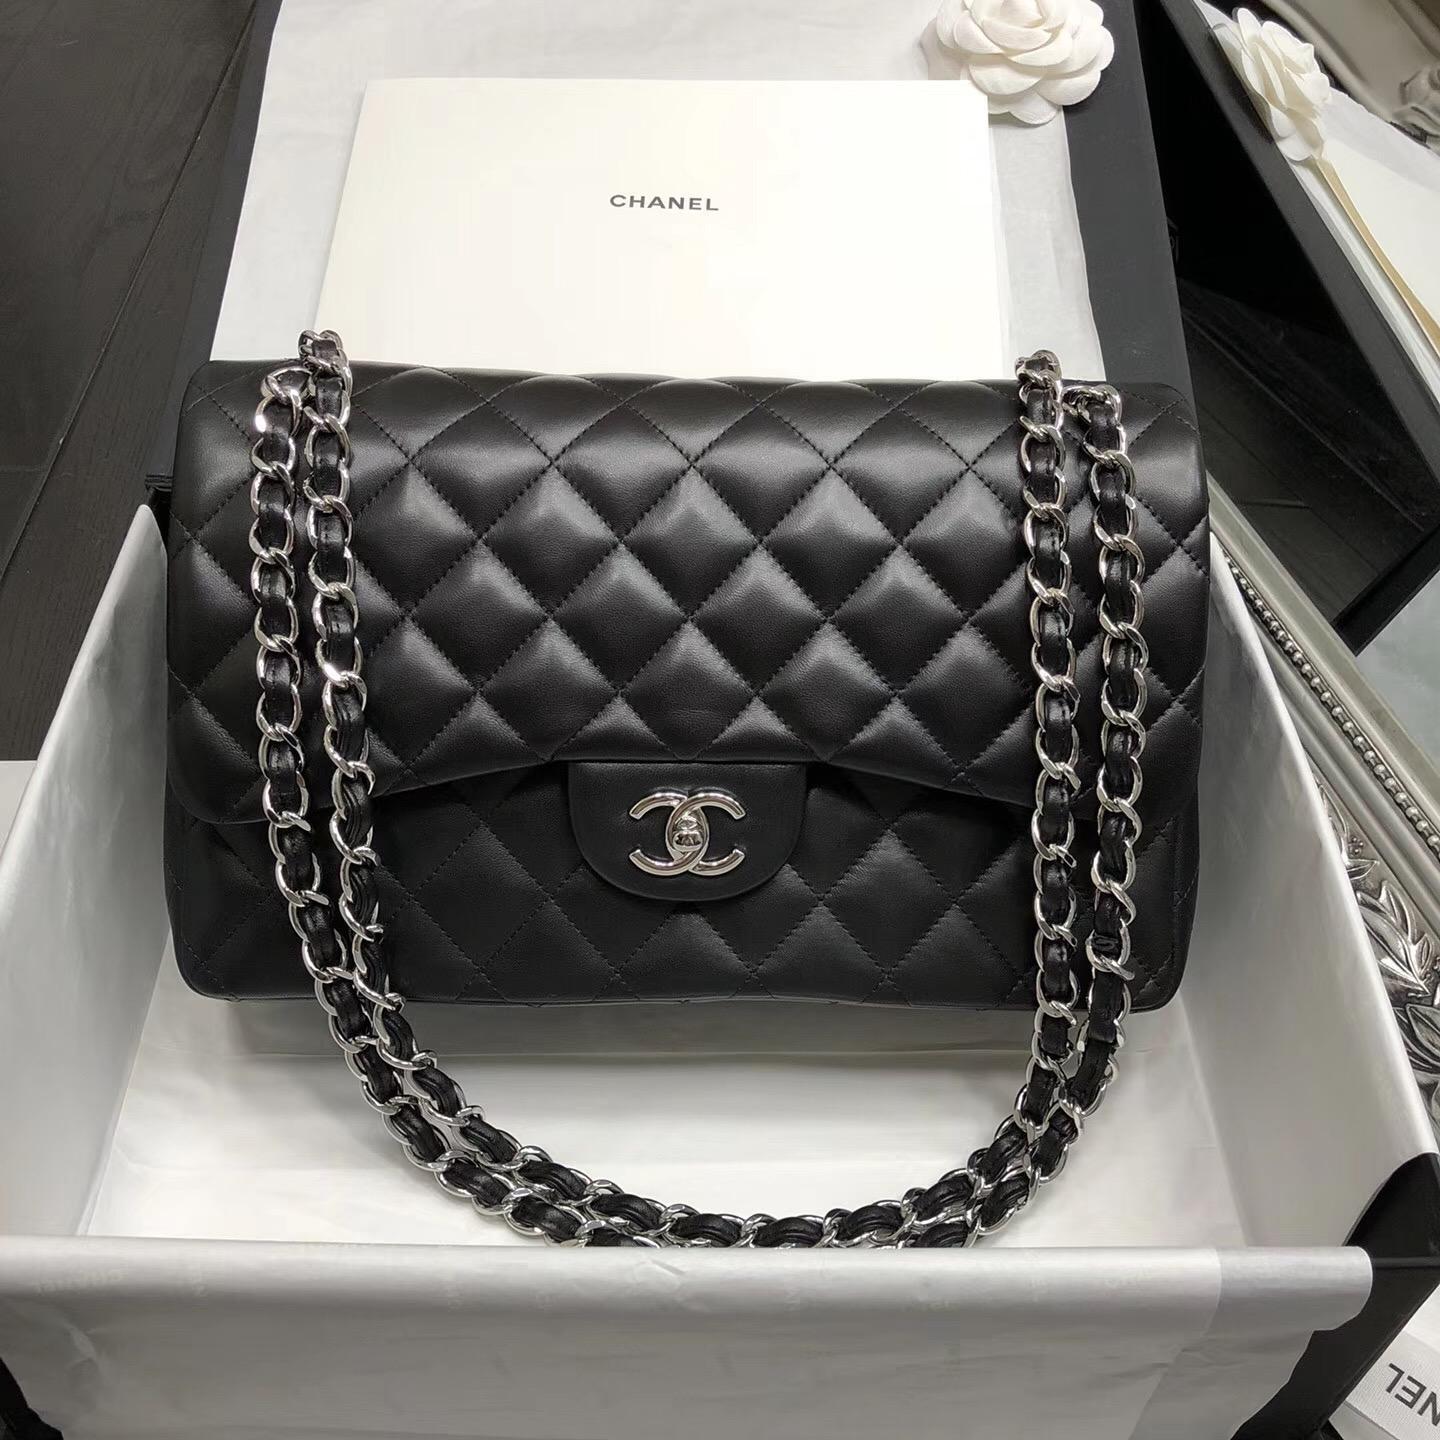 Buy Chanel Bags Online Dubai | Paul Smith